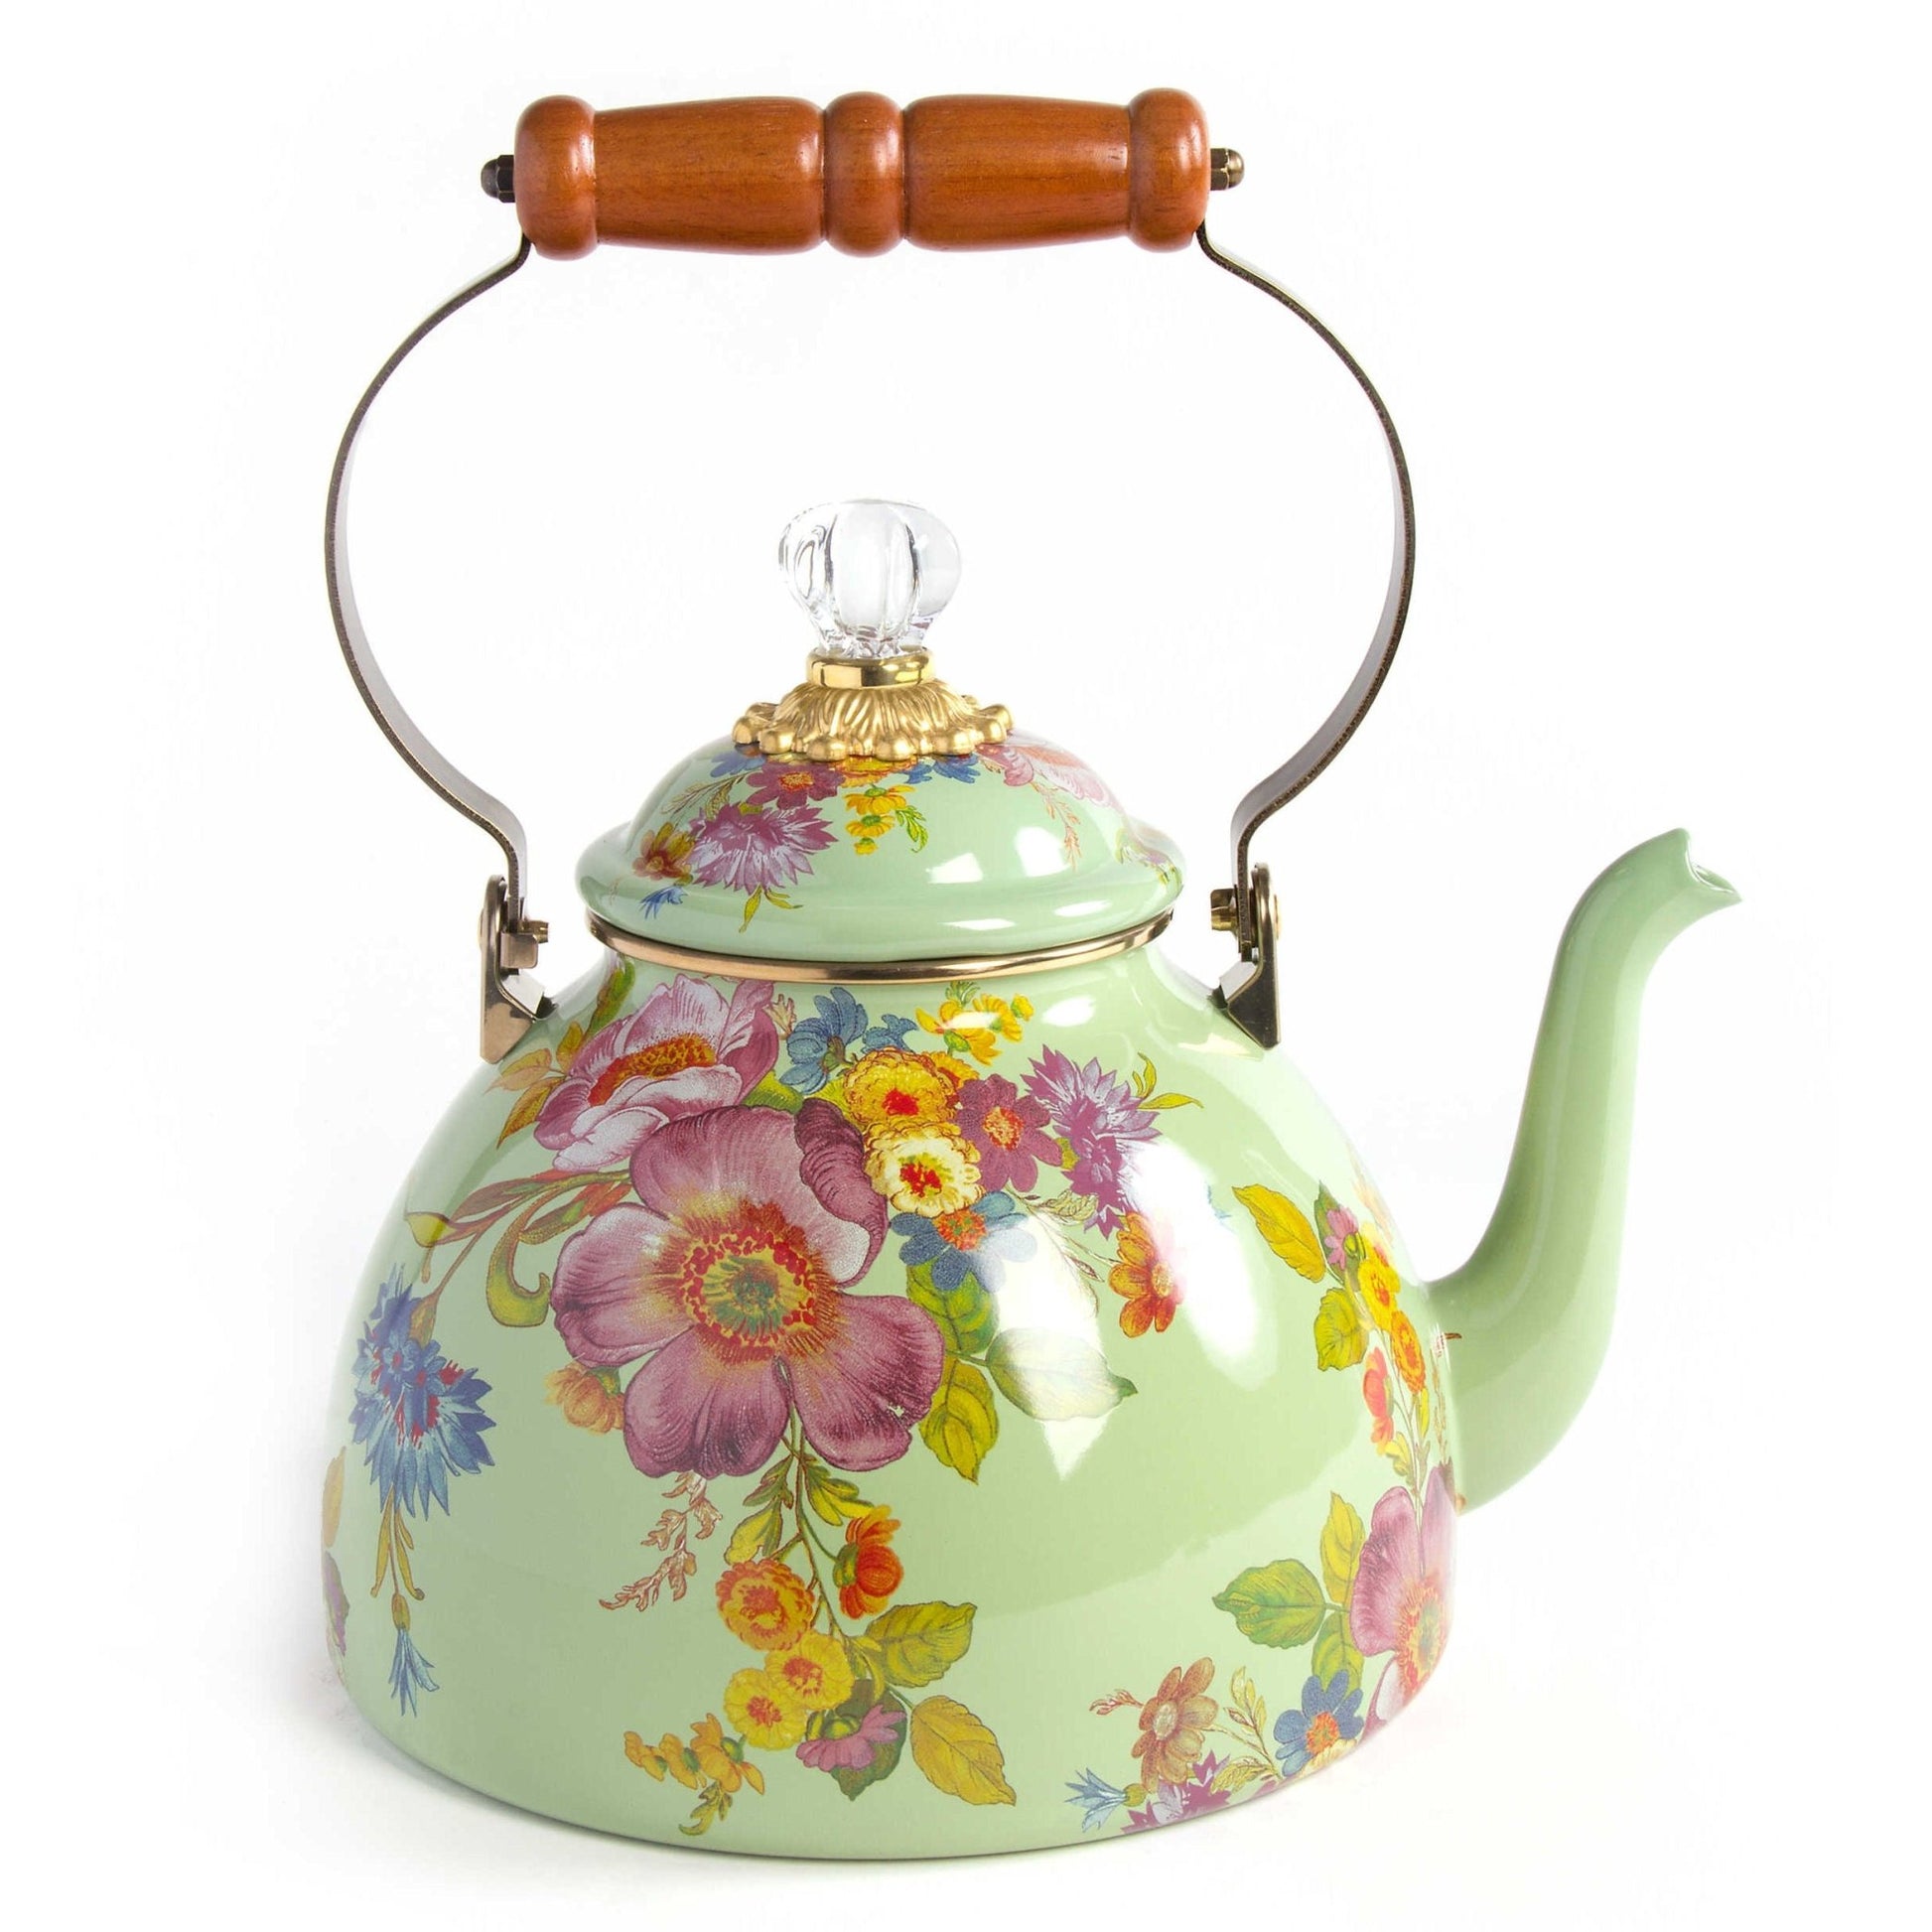 Flower Market Green Enamel Tea Kettle by Mackenzie-Childs 2.84L - |VESIMI Design| Luxury and Rustic bathrooms online